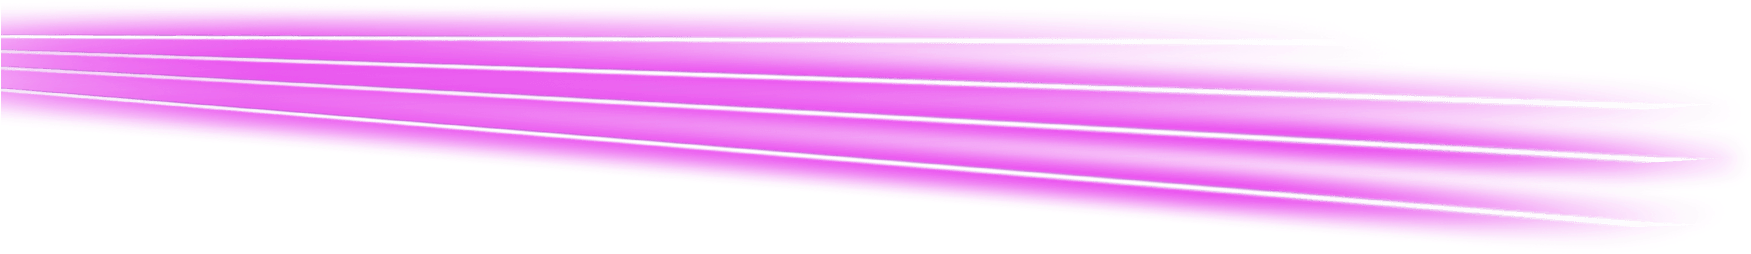 Vibrant Purple Neon Stroke PNG